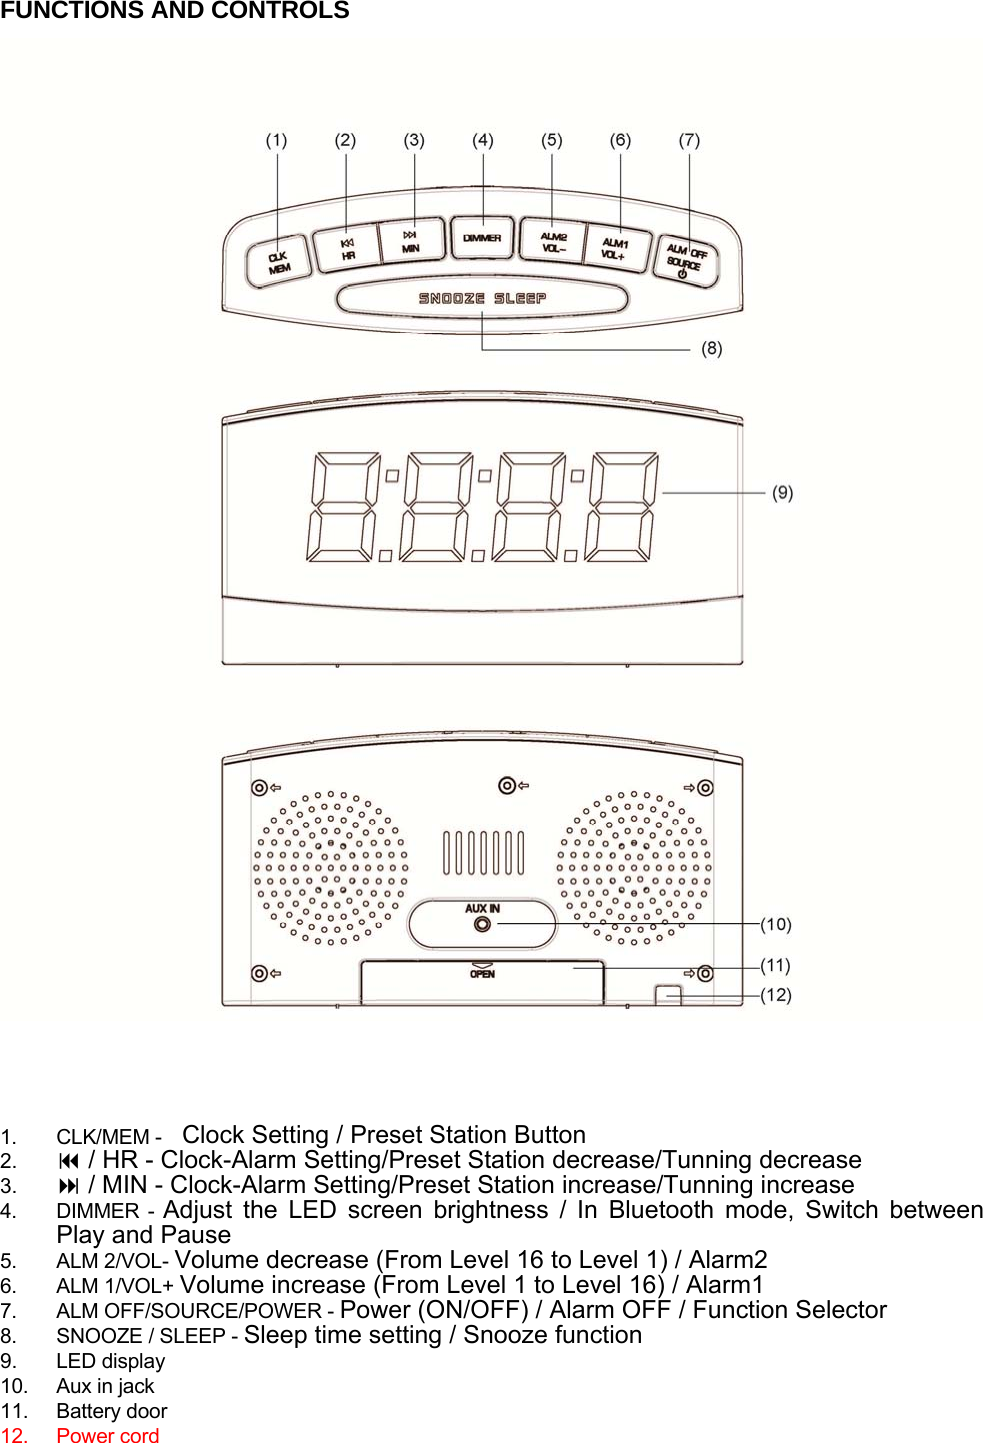 Sylvania bluetooth autoset clock radio instructions